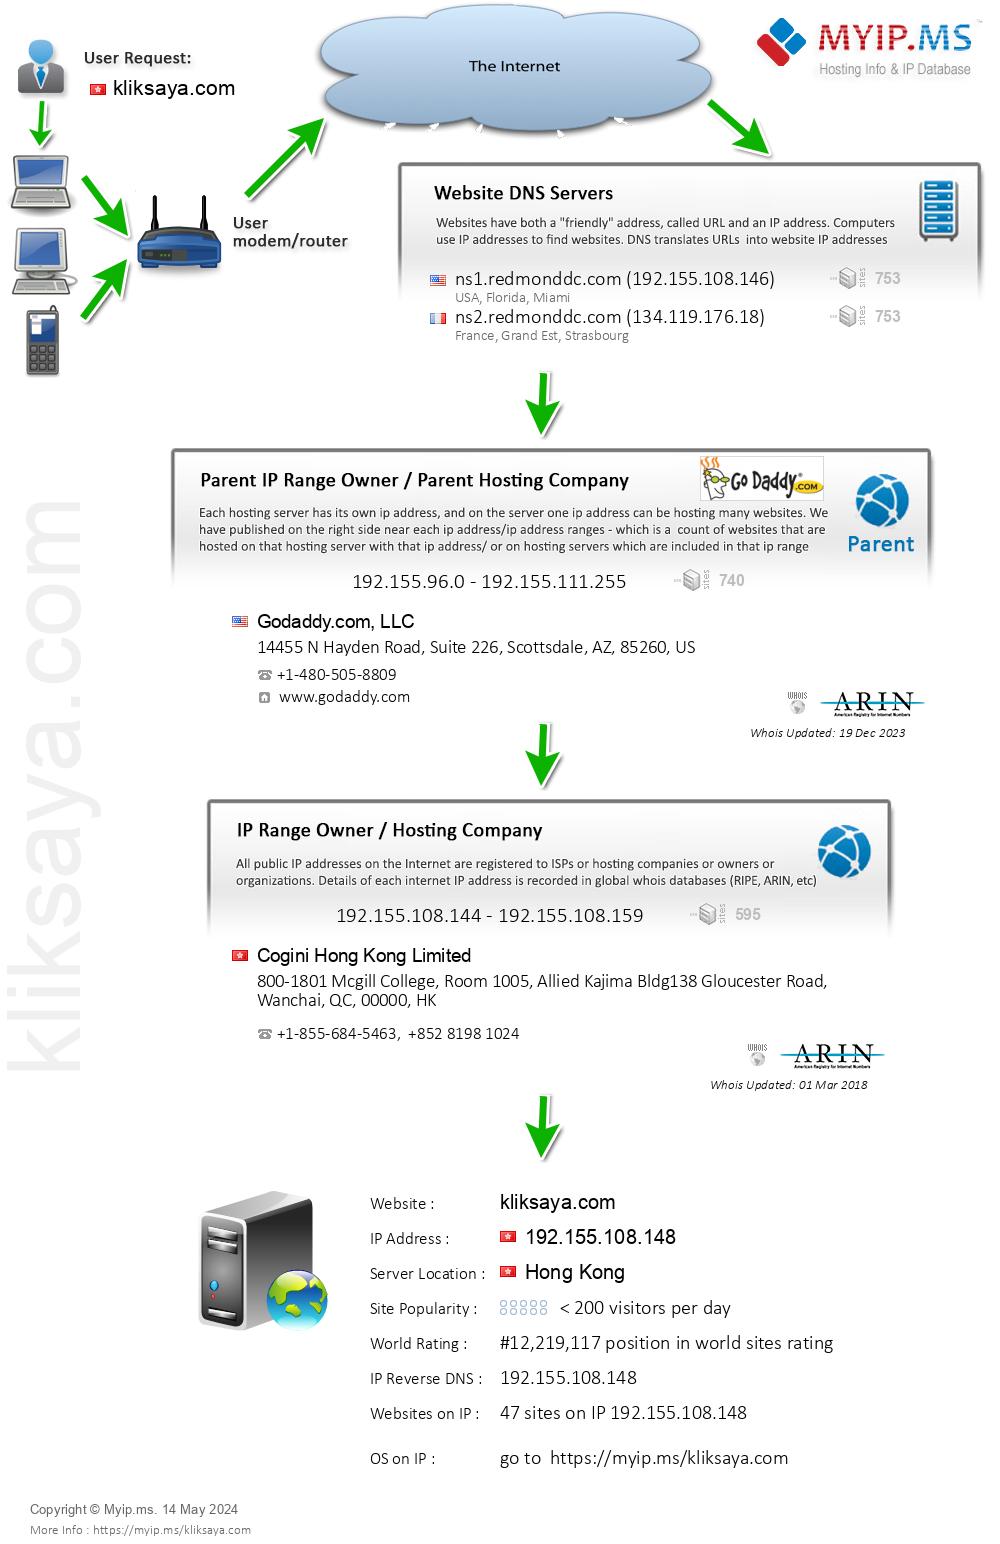 Kliksaya.com - Website Hosting Visual IP Diagram